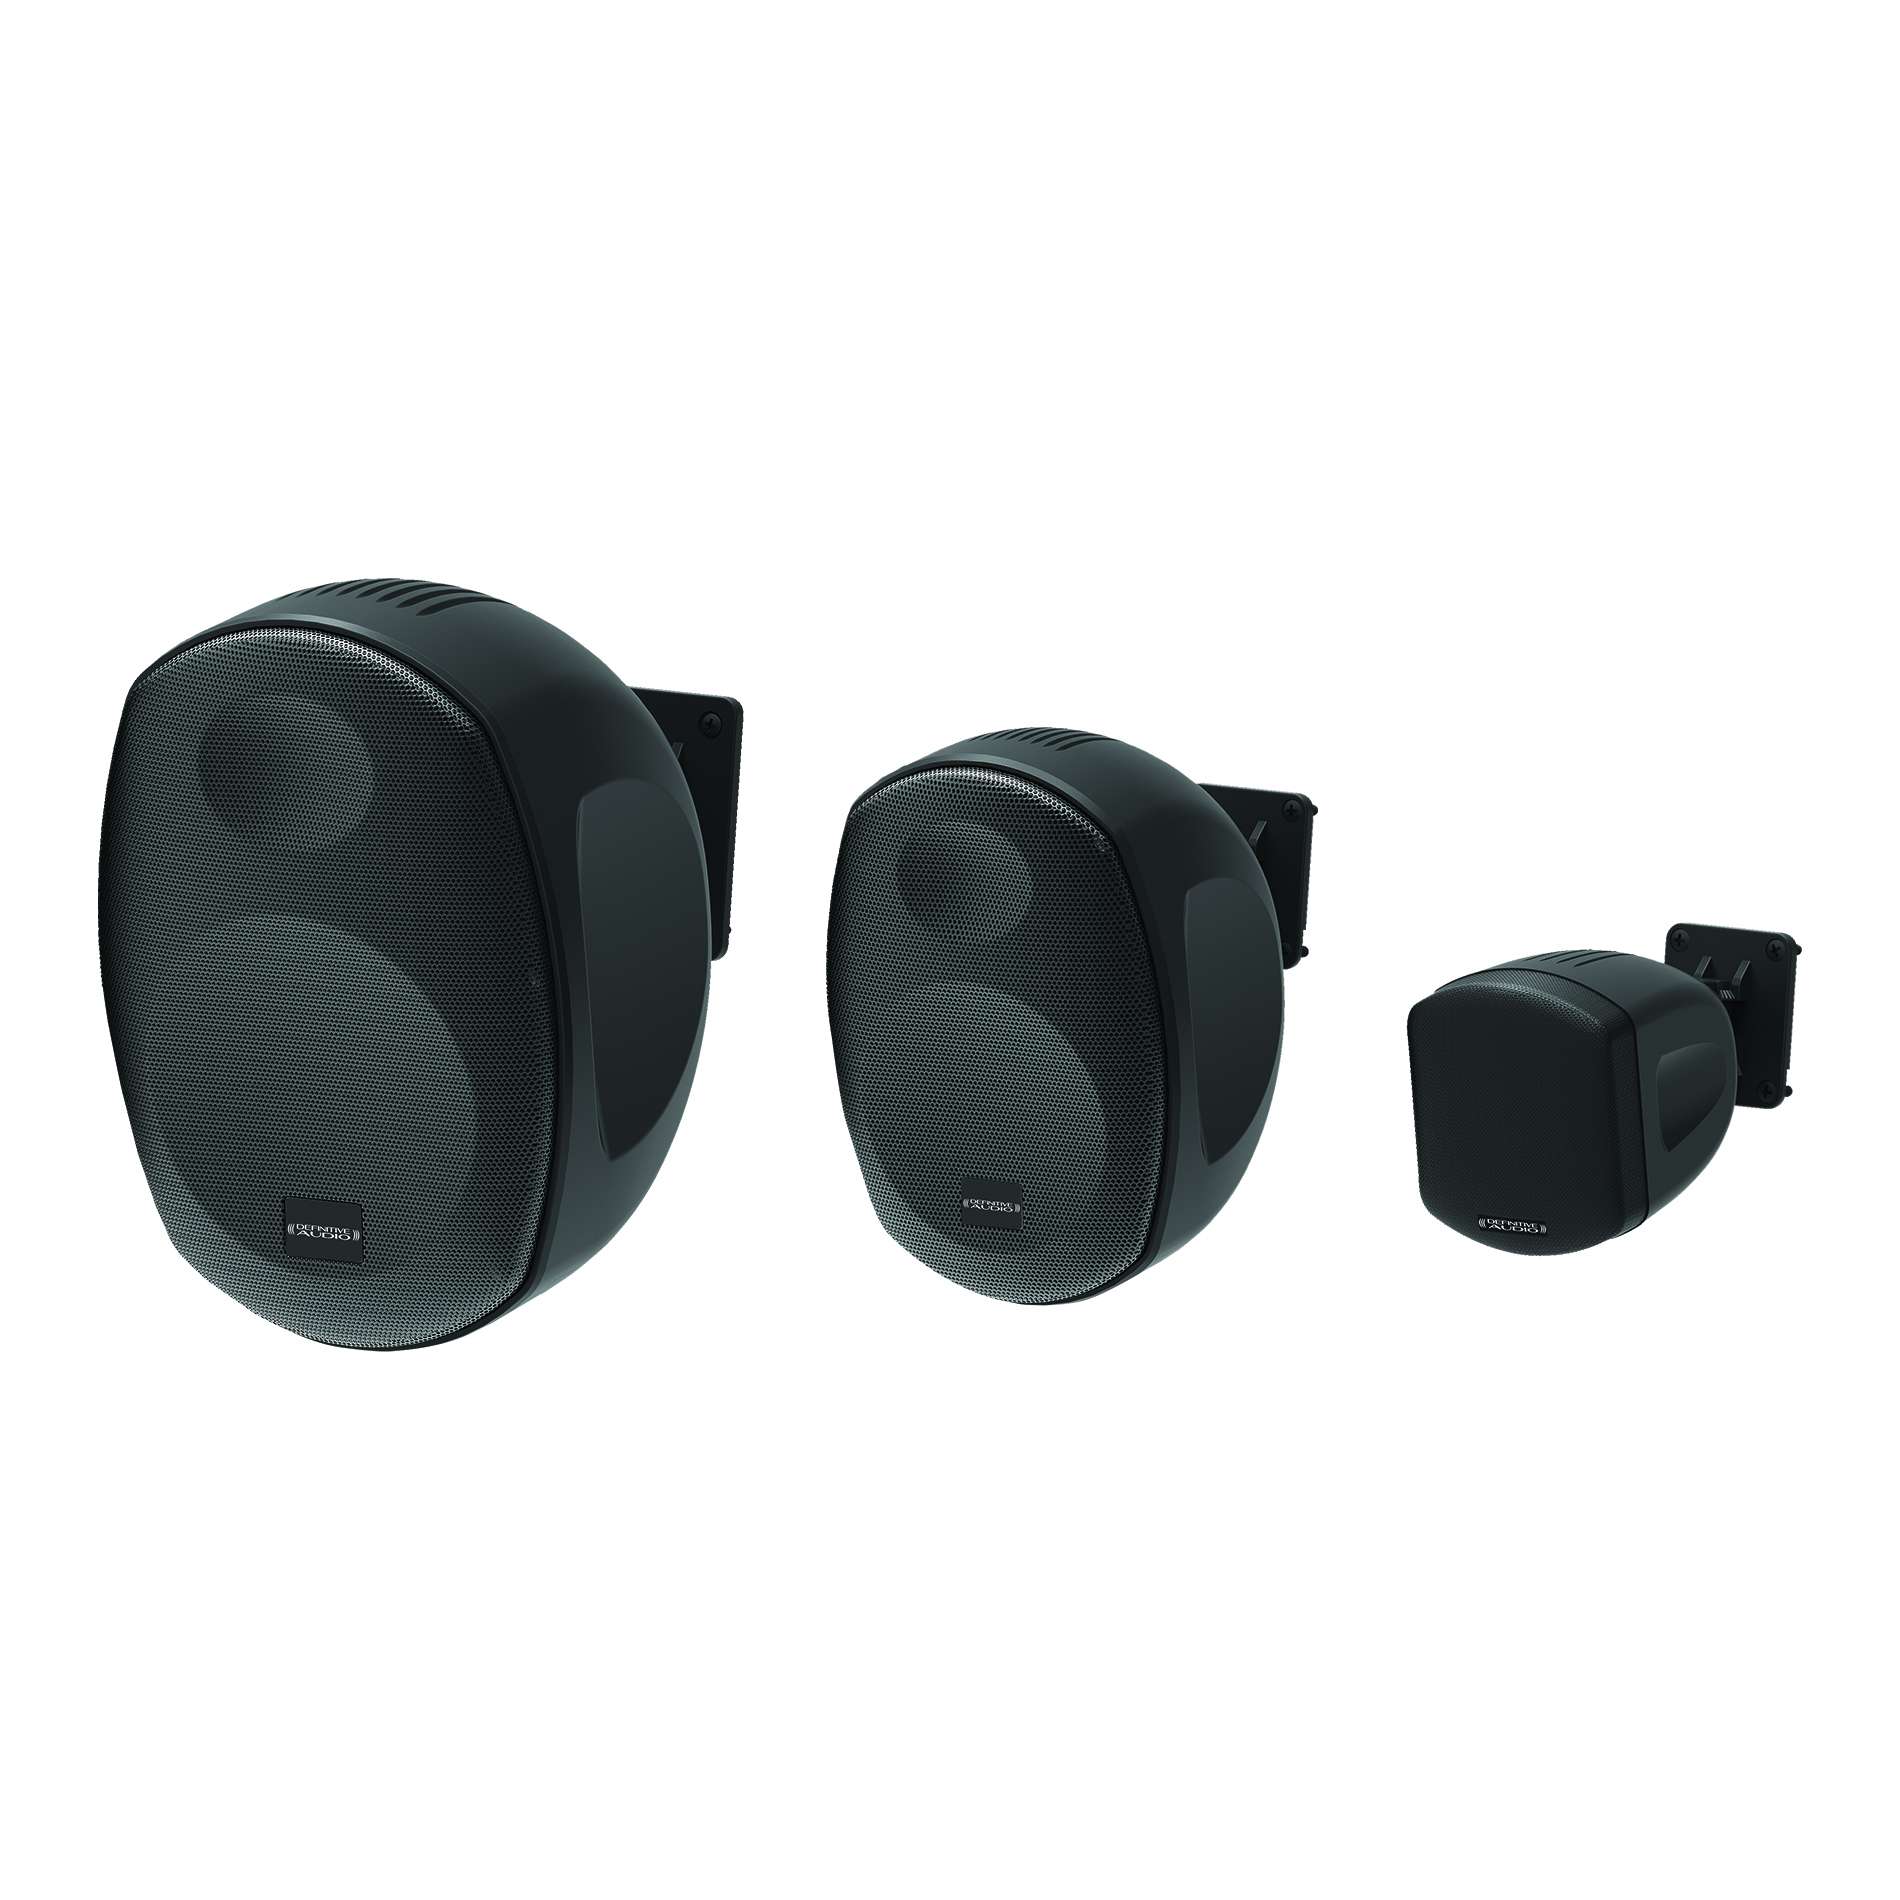 Definitive Audio Klipper 5t Bl - Installation speakers - Variation 1